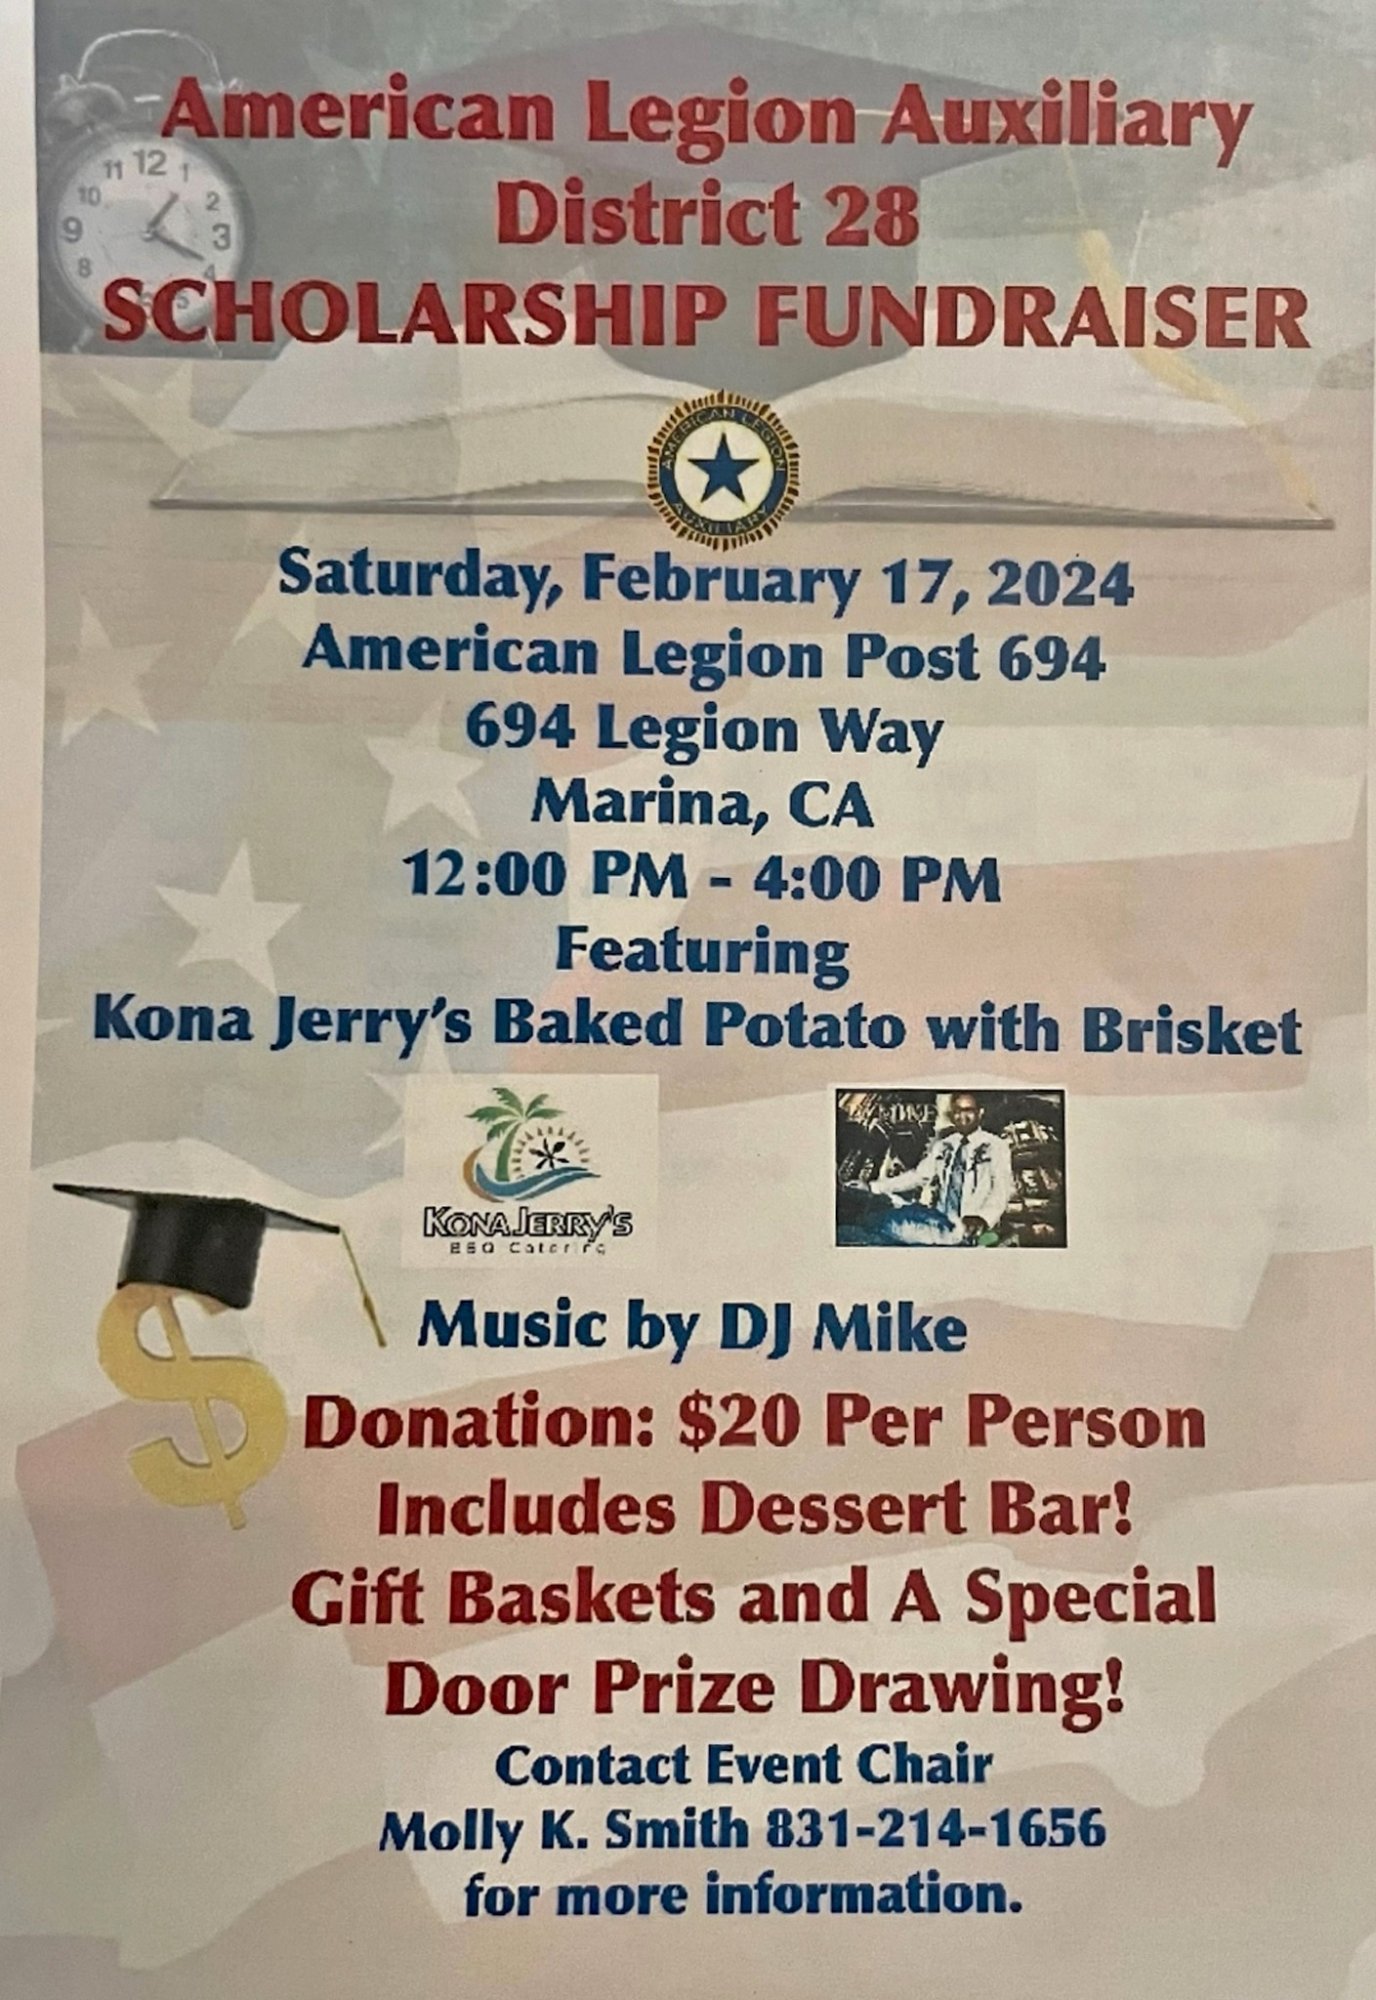 2-17-24 - District 28 Scholarship Fundraiser at American Legion Post 694, Marina.